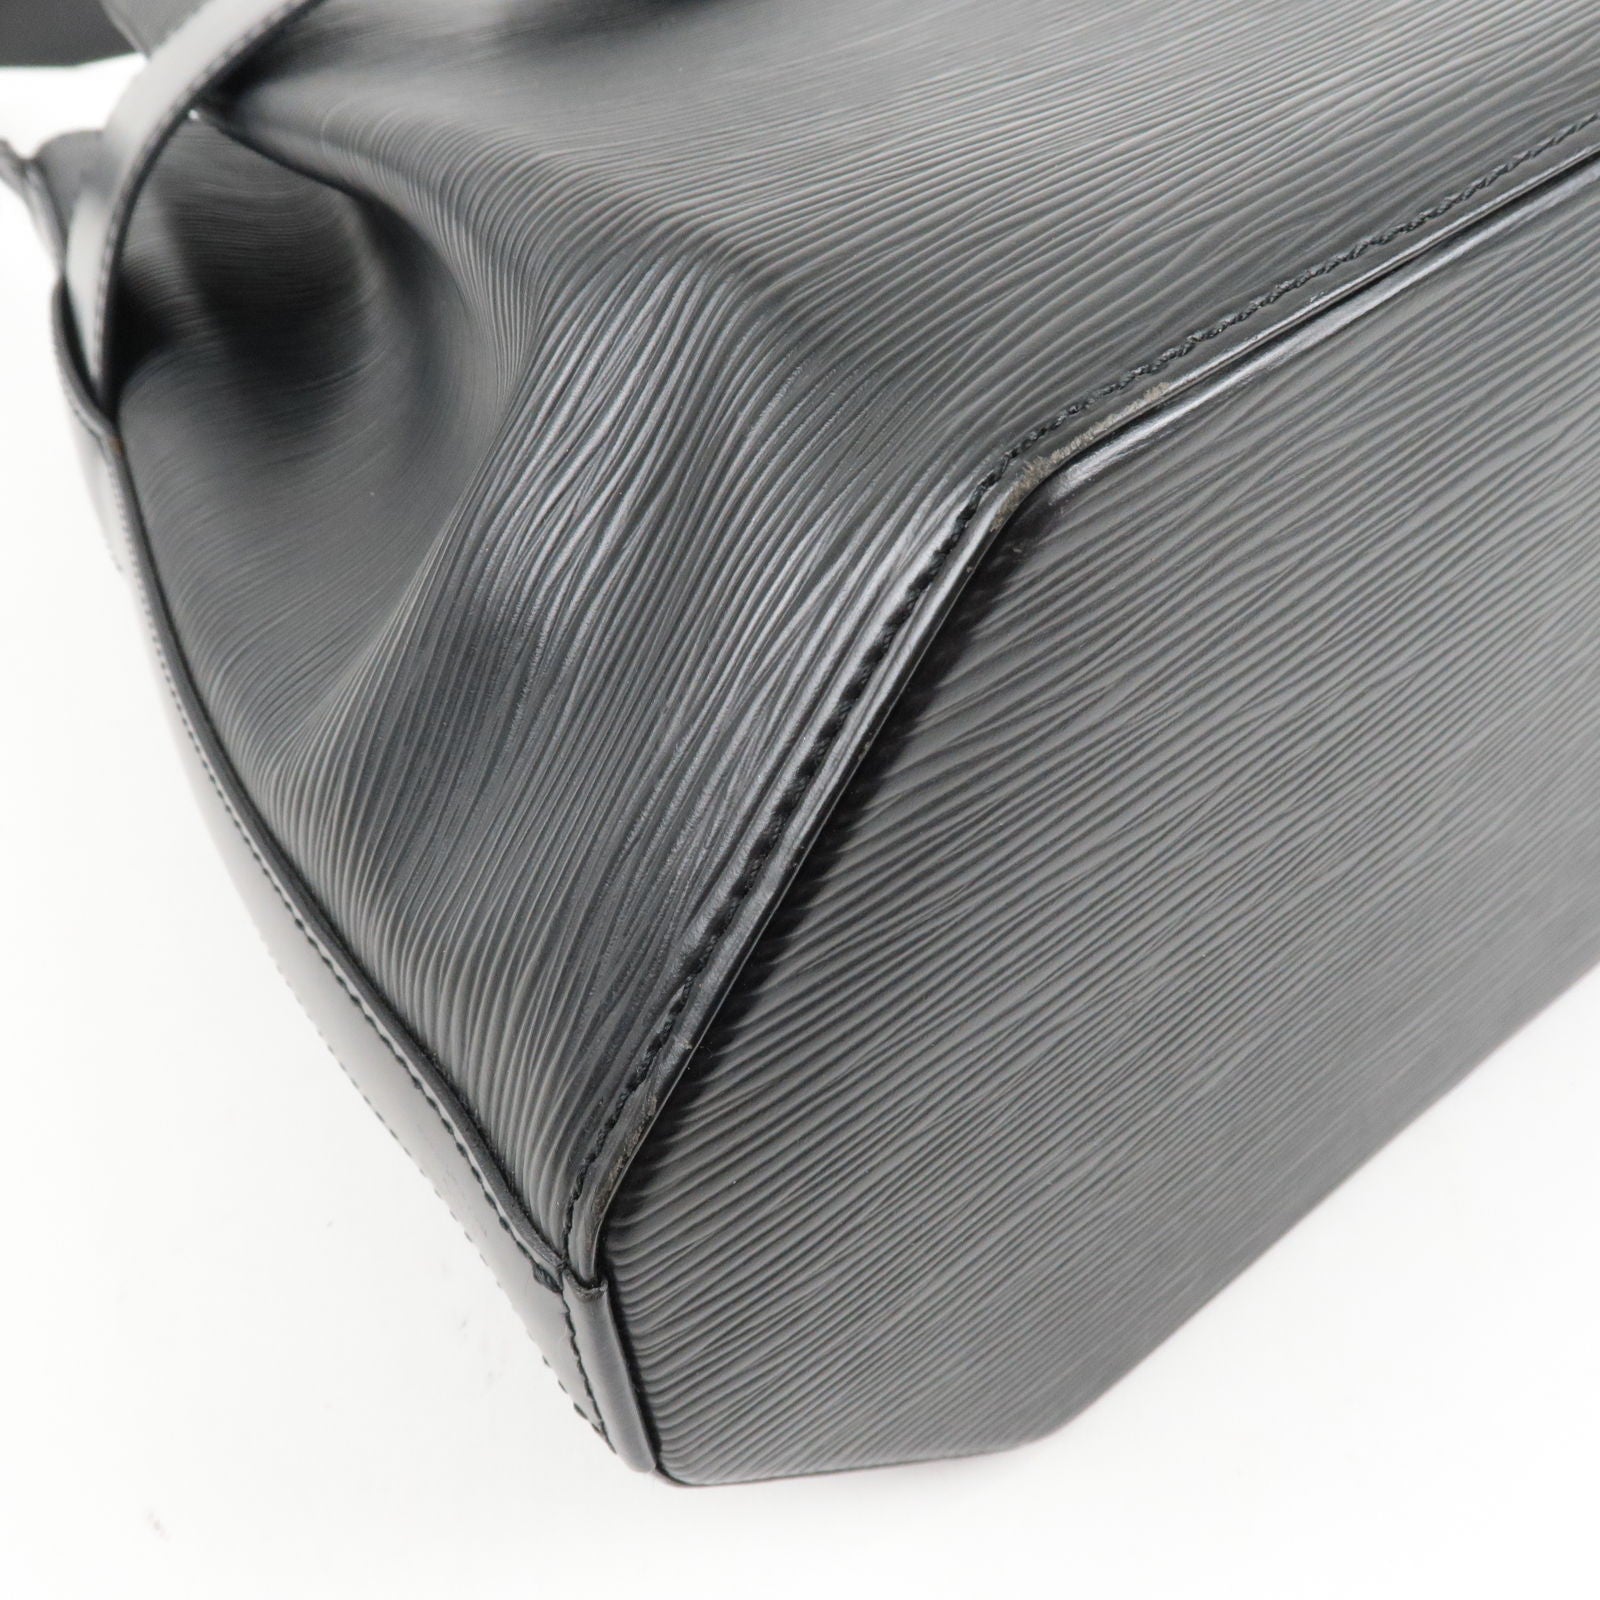 Louis Vuitton Epi Leather Bucket Bag Black